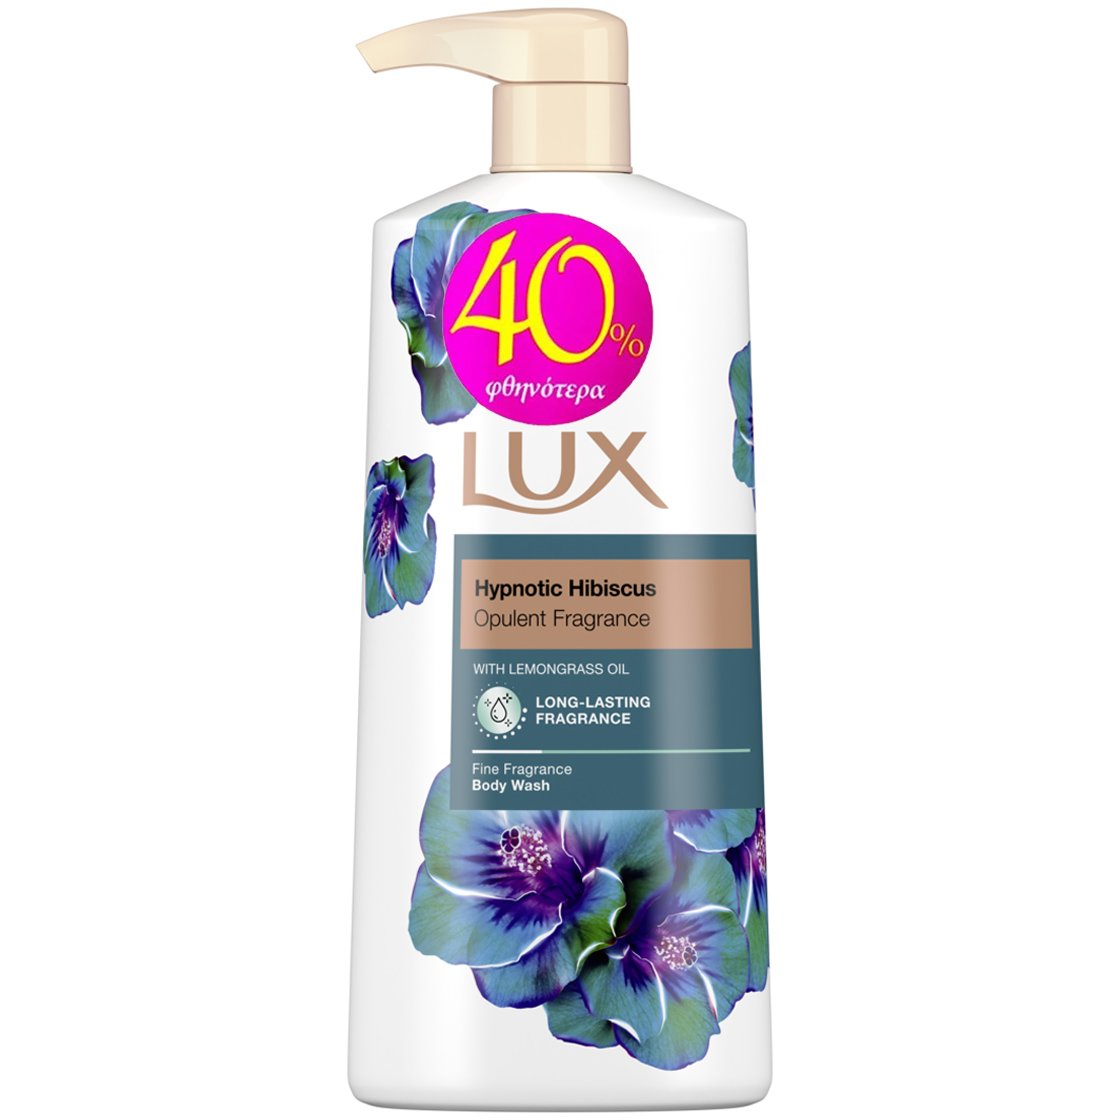 Lux Hypnotic Hibiscus Opulent Fragrance Body Wash Αφρόλουτρο με Εκλεπτισμένο Άρωμα από Έλαιο Λεμονόχορτου για Βελούδινη Επιδερμίδα 600ml Promo -40%